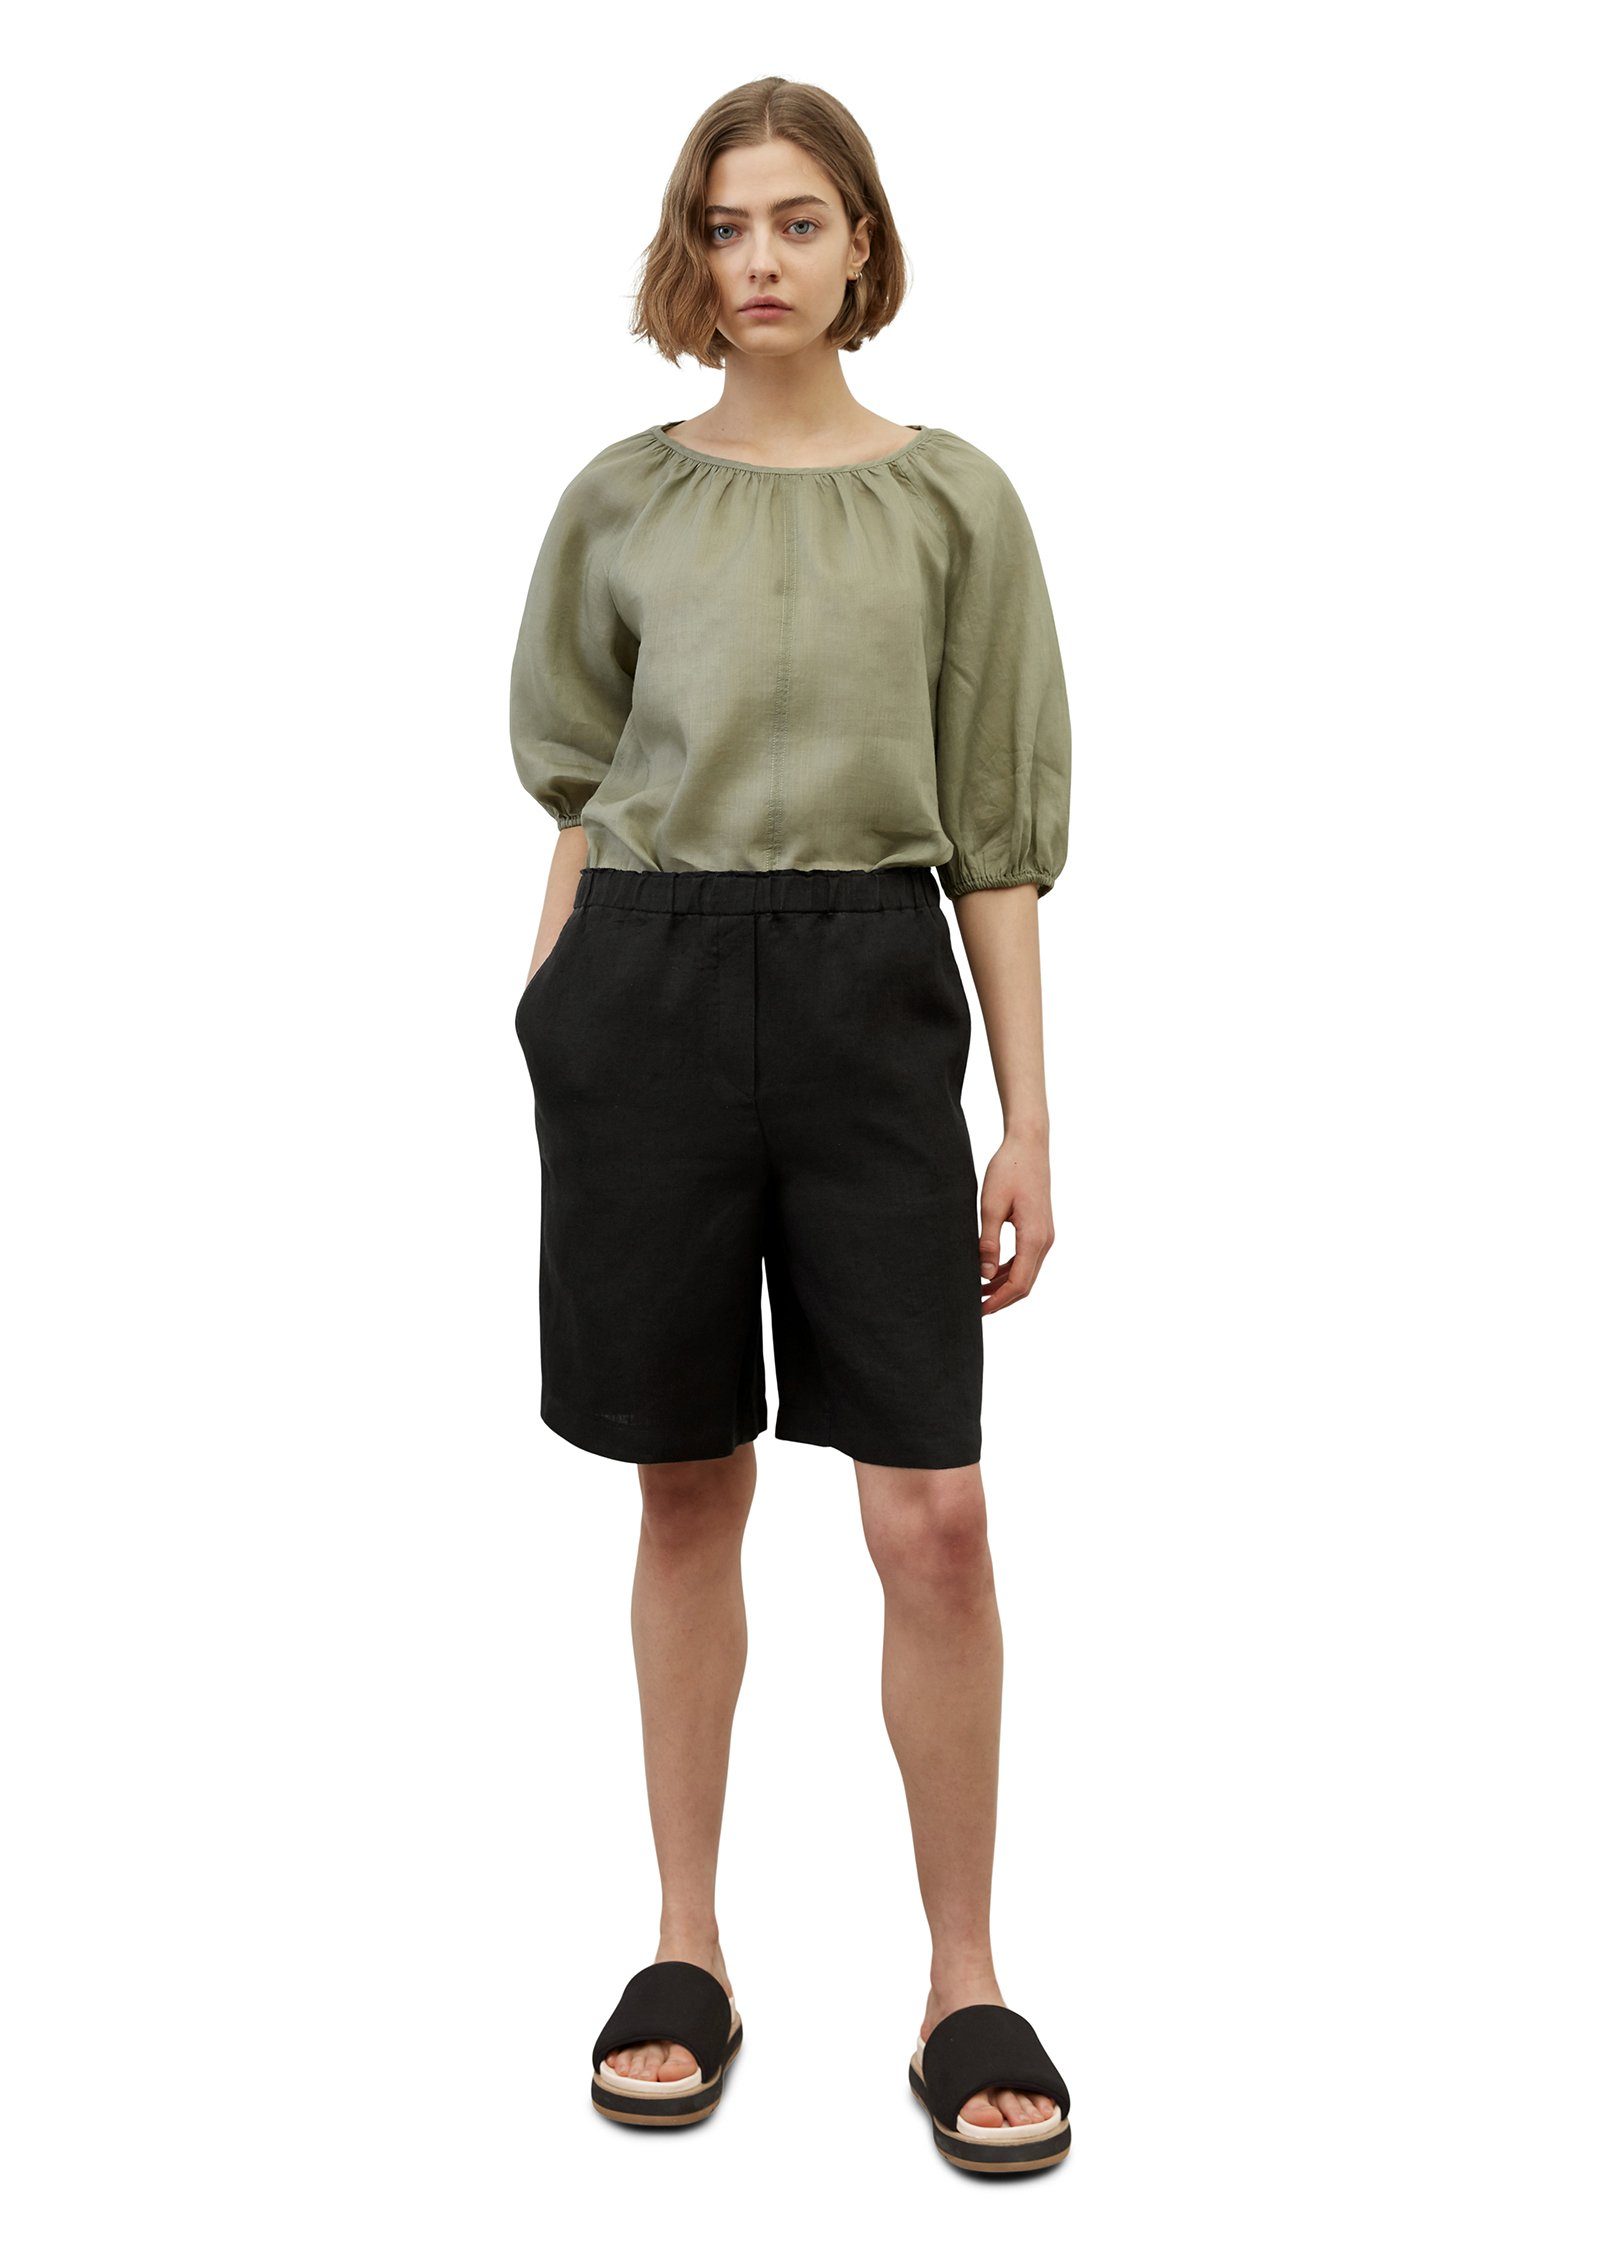 Marc O'Polo Shorts aus softer schwarz Hanf-Qualität